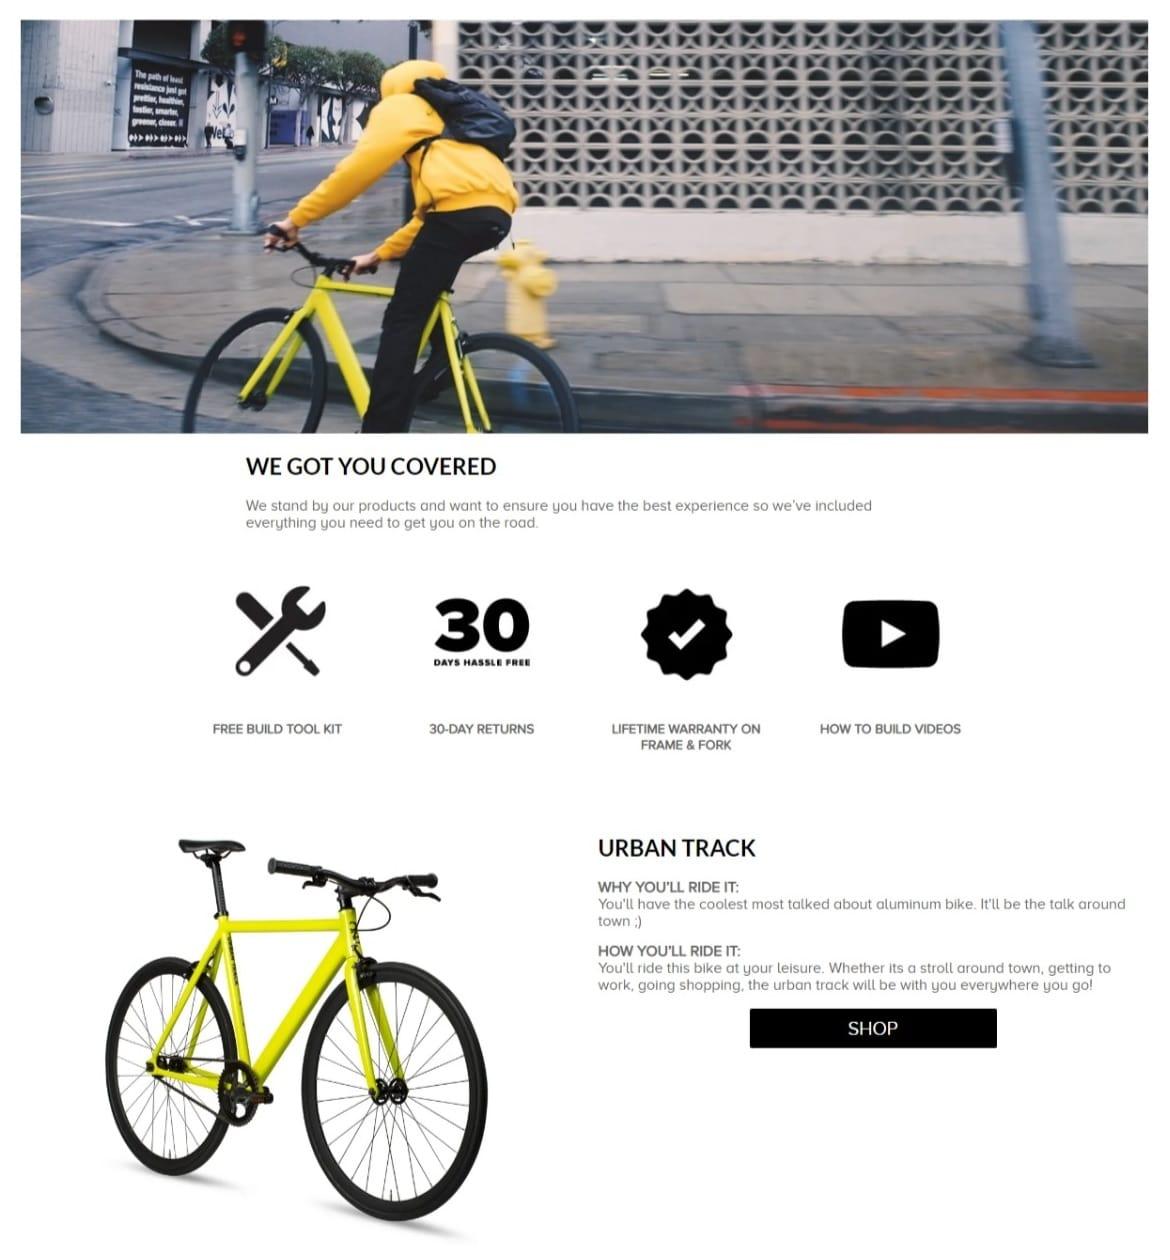 product landing page 6ku bike details cta to product page